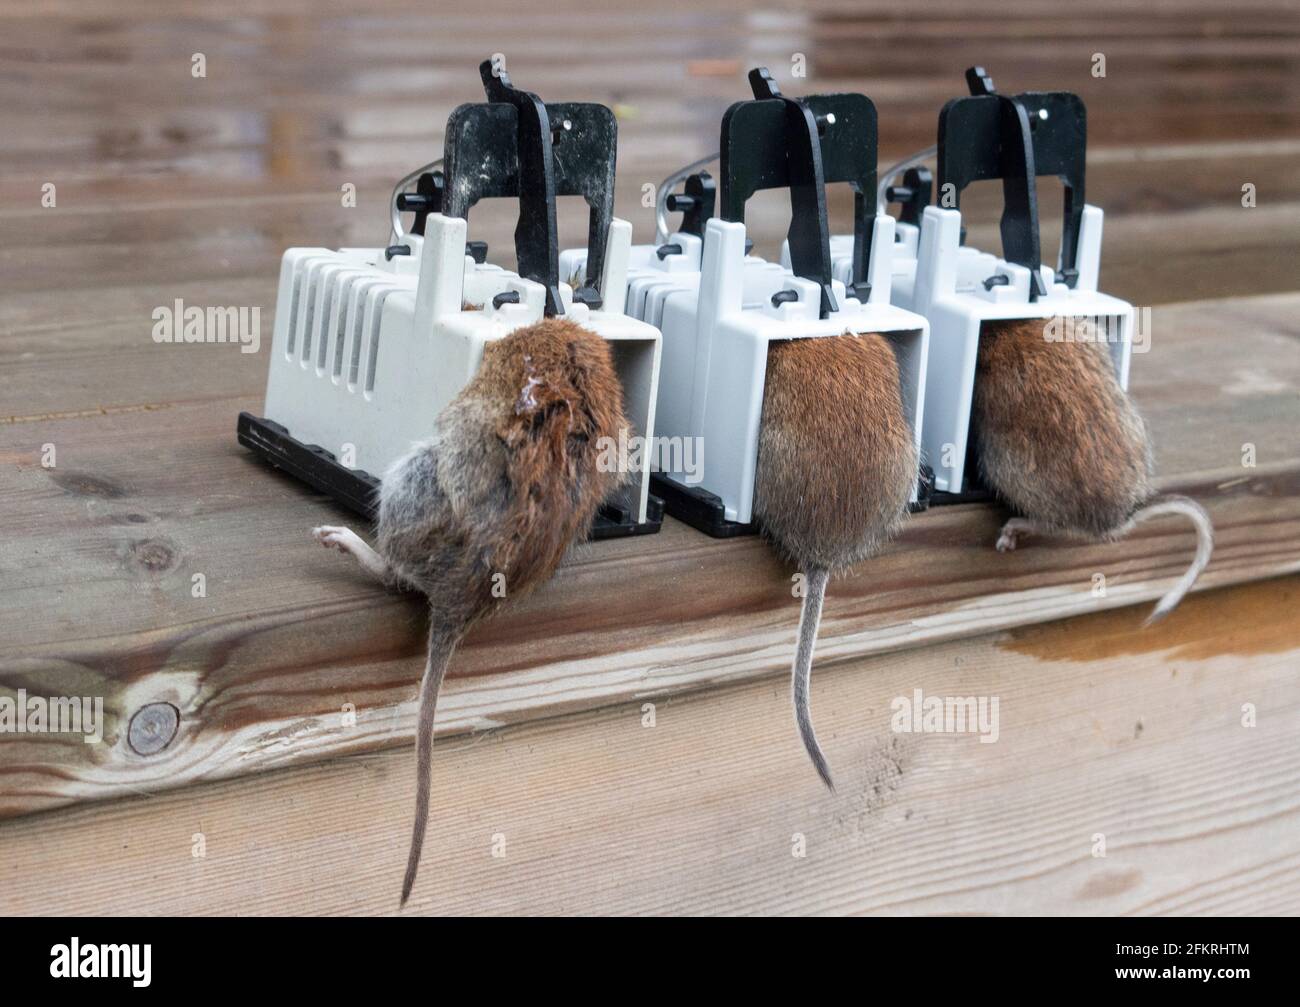 https://c8.alamy.com/comp/2FKRHTM/three-mice-caught-in-traps-2FKRHTM.jpg